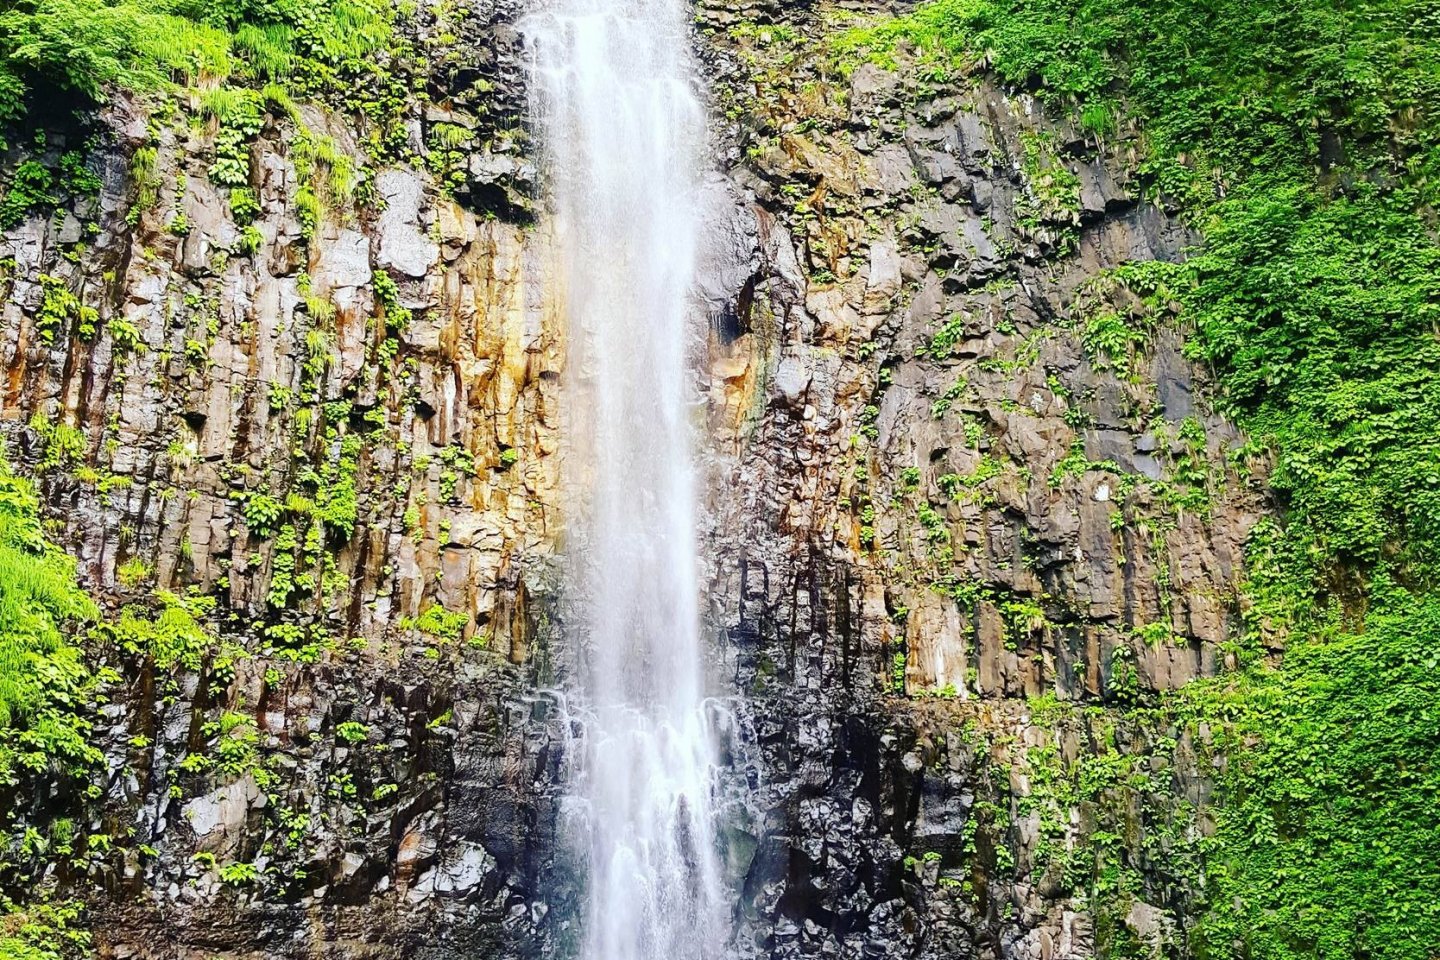 The Tamasudare no Taki waterfall